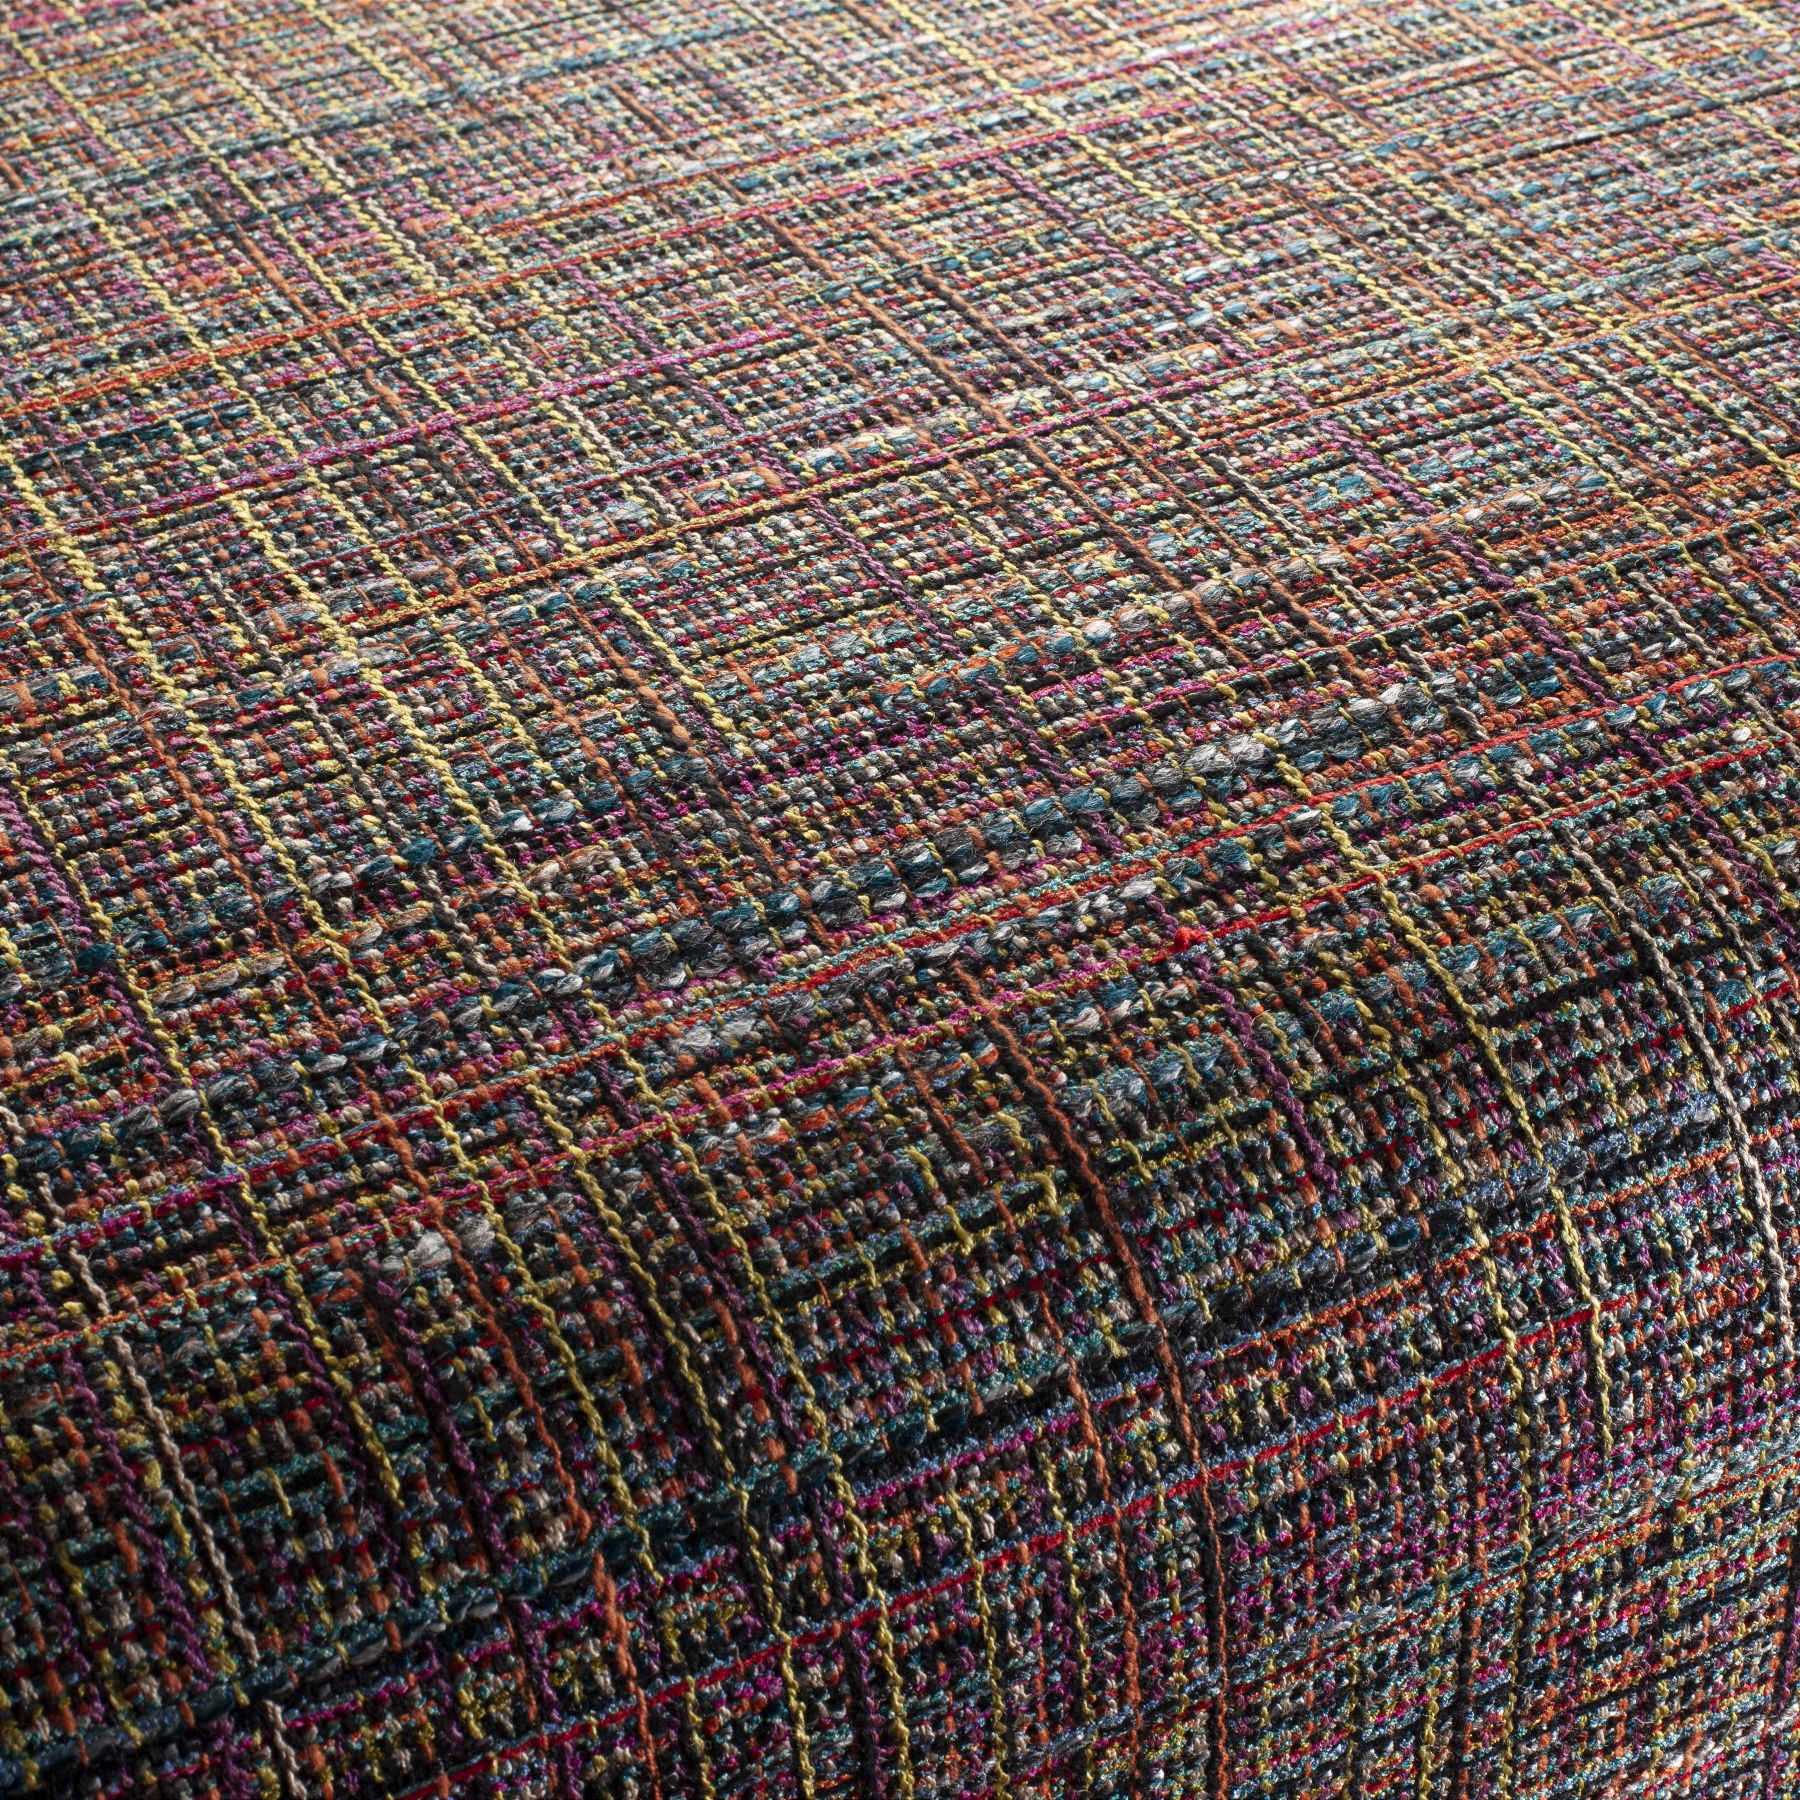 Martingy fabric by Jab référence 9-2549